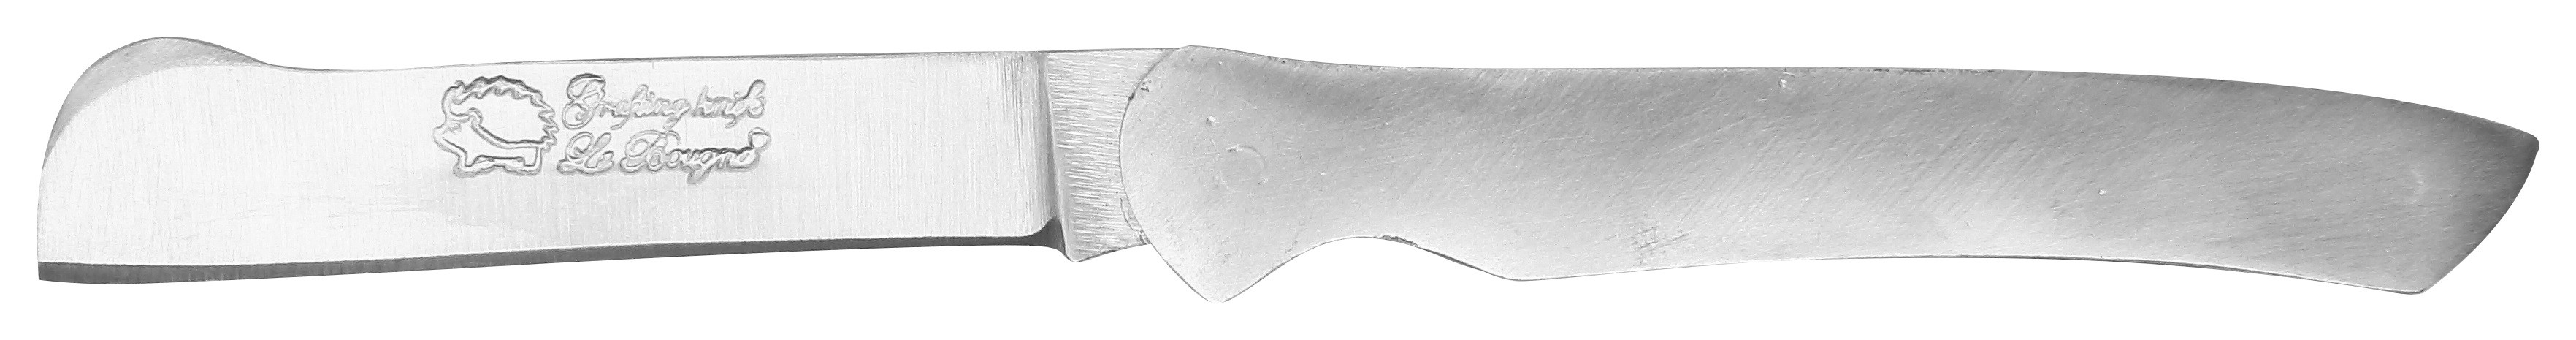 Greffoir Élégance 8 cm - aluminium